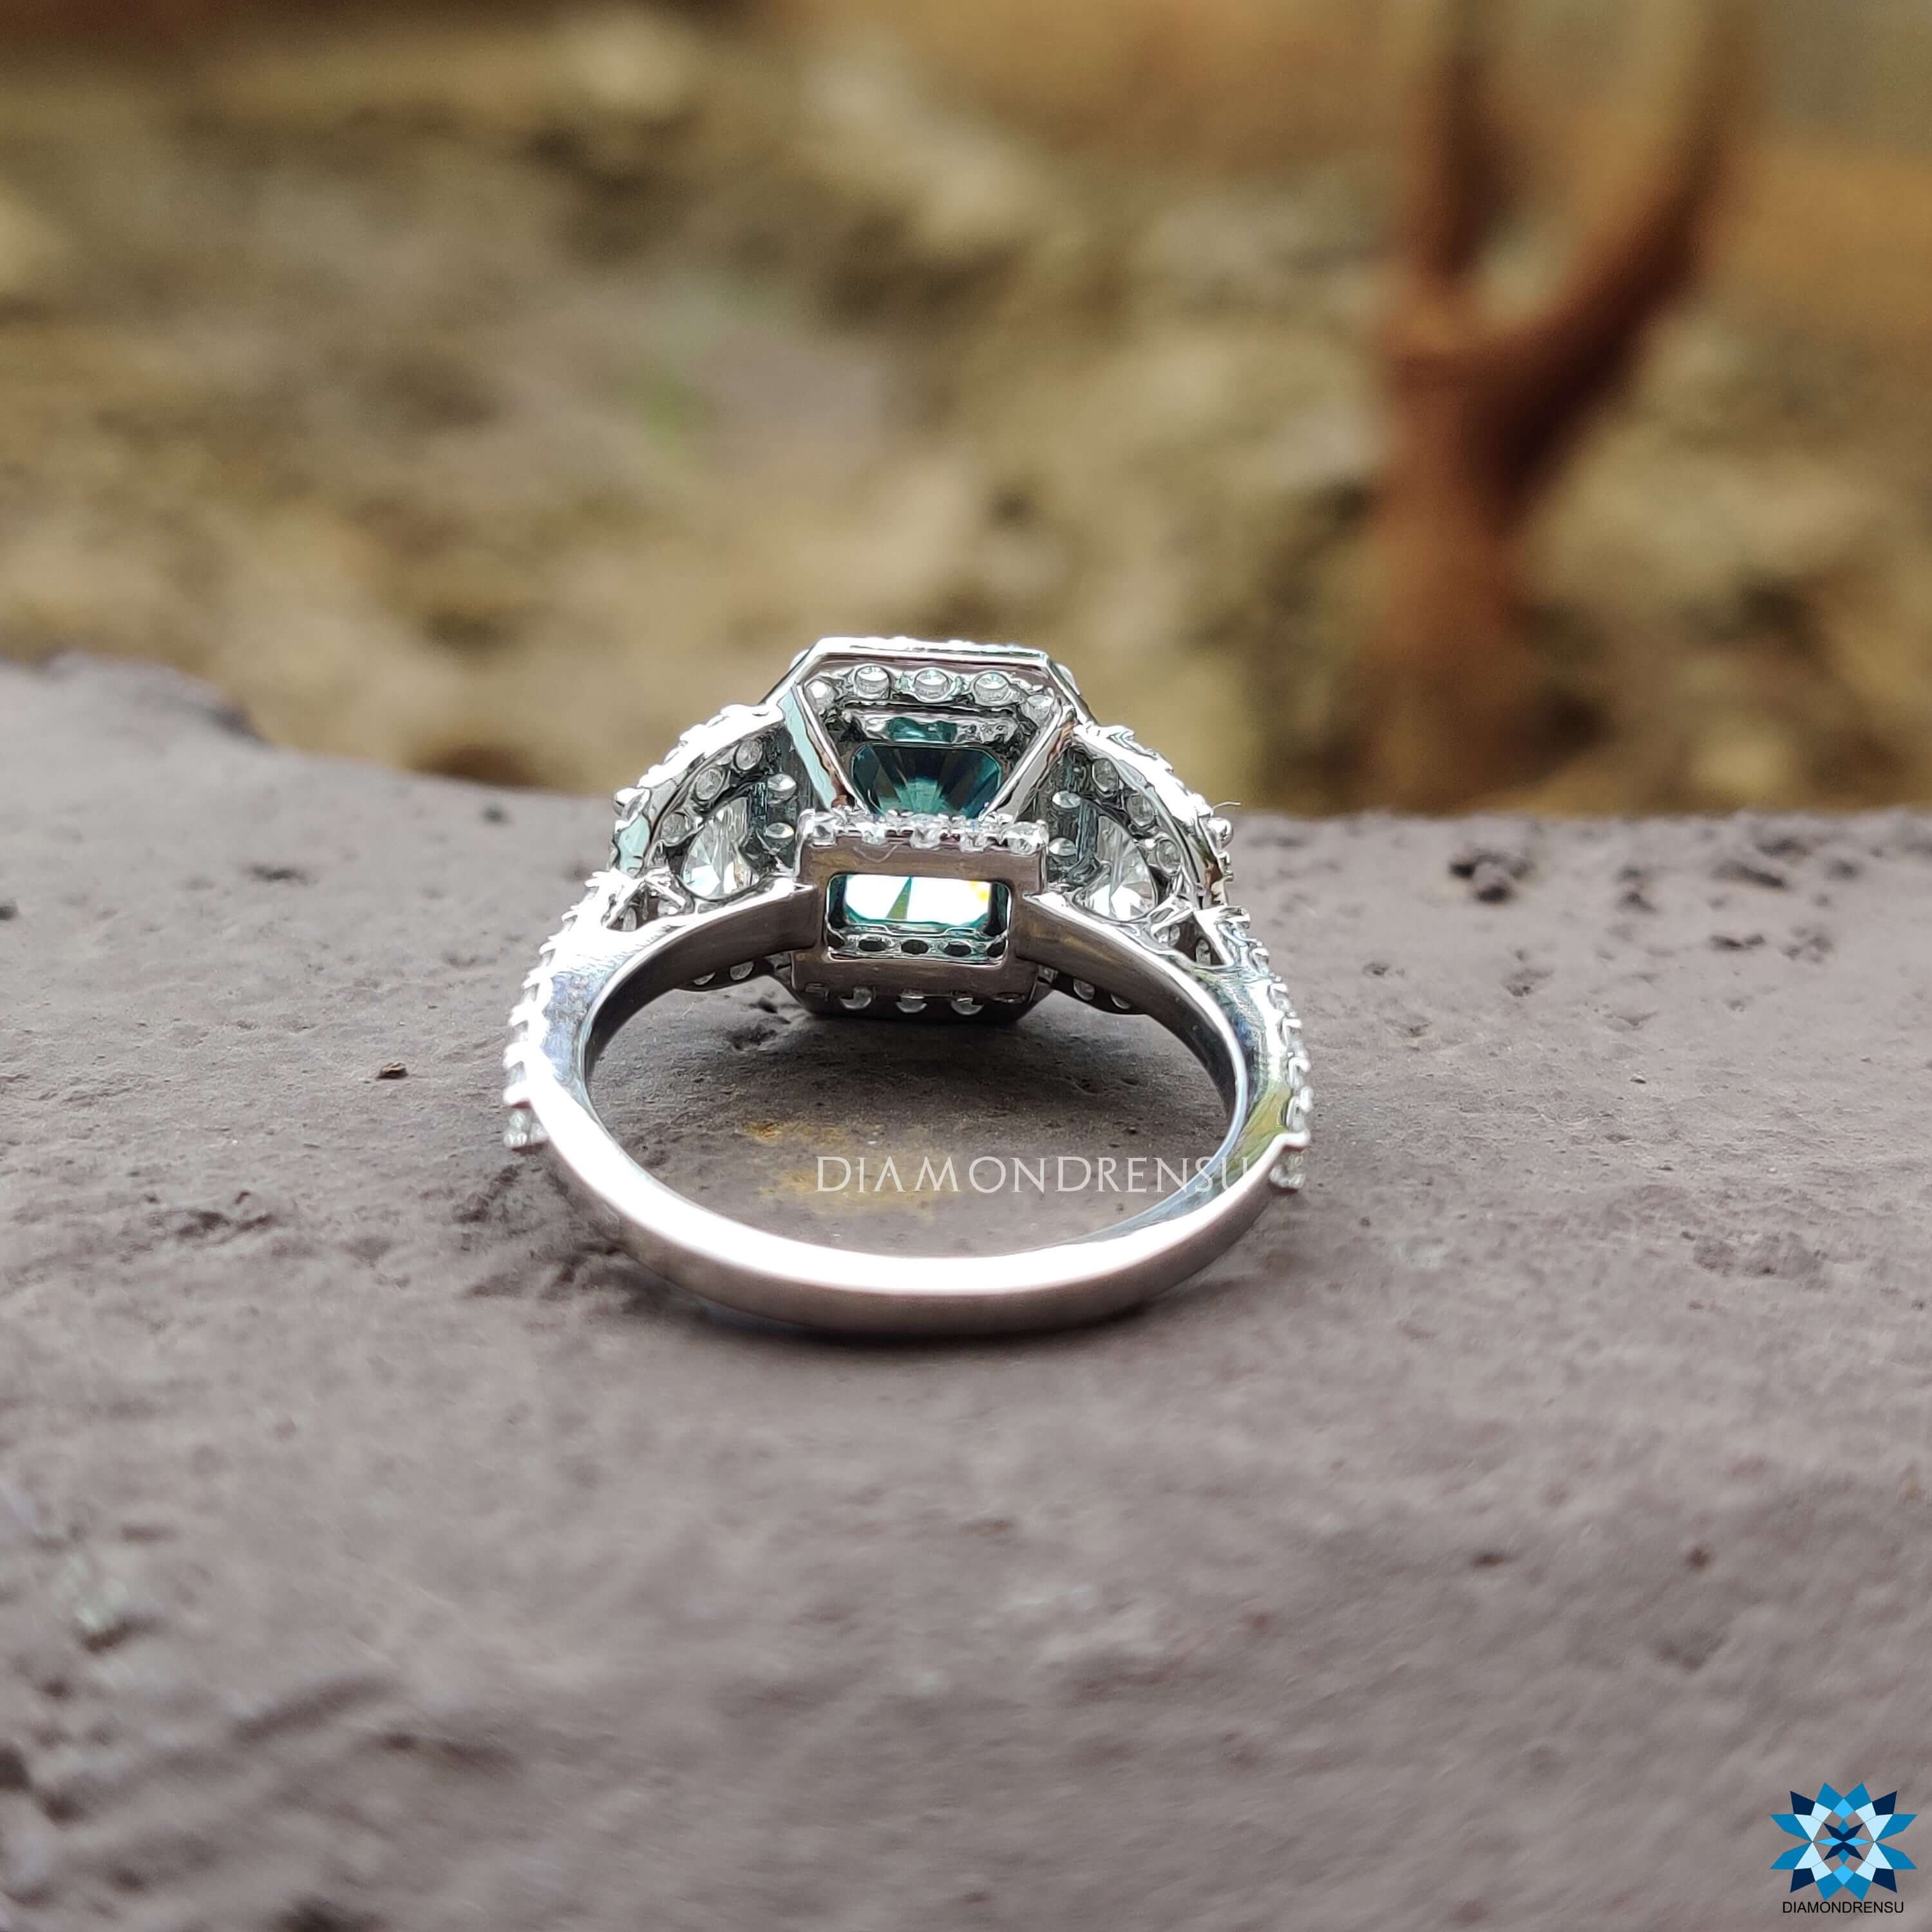 create your own engagement ring - diamondrensu